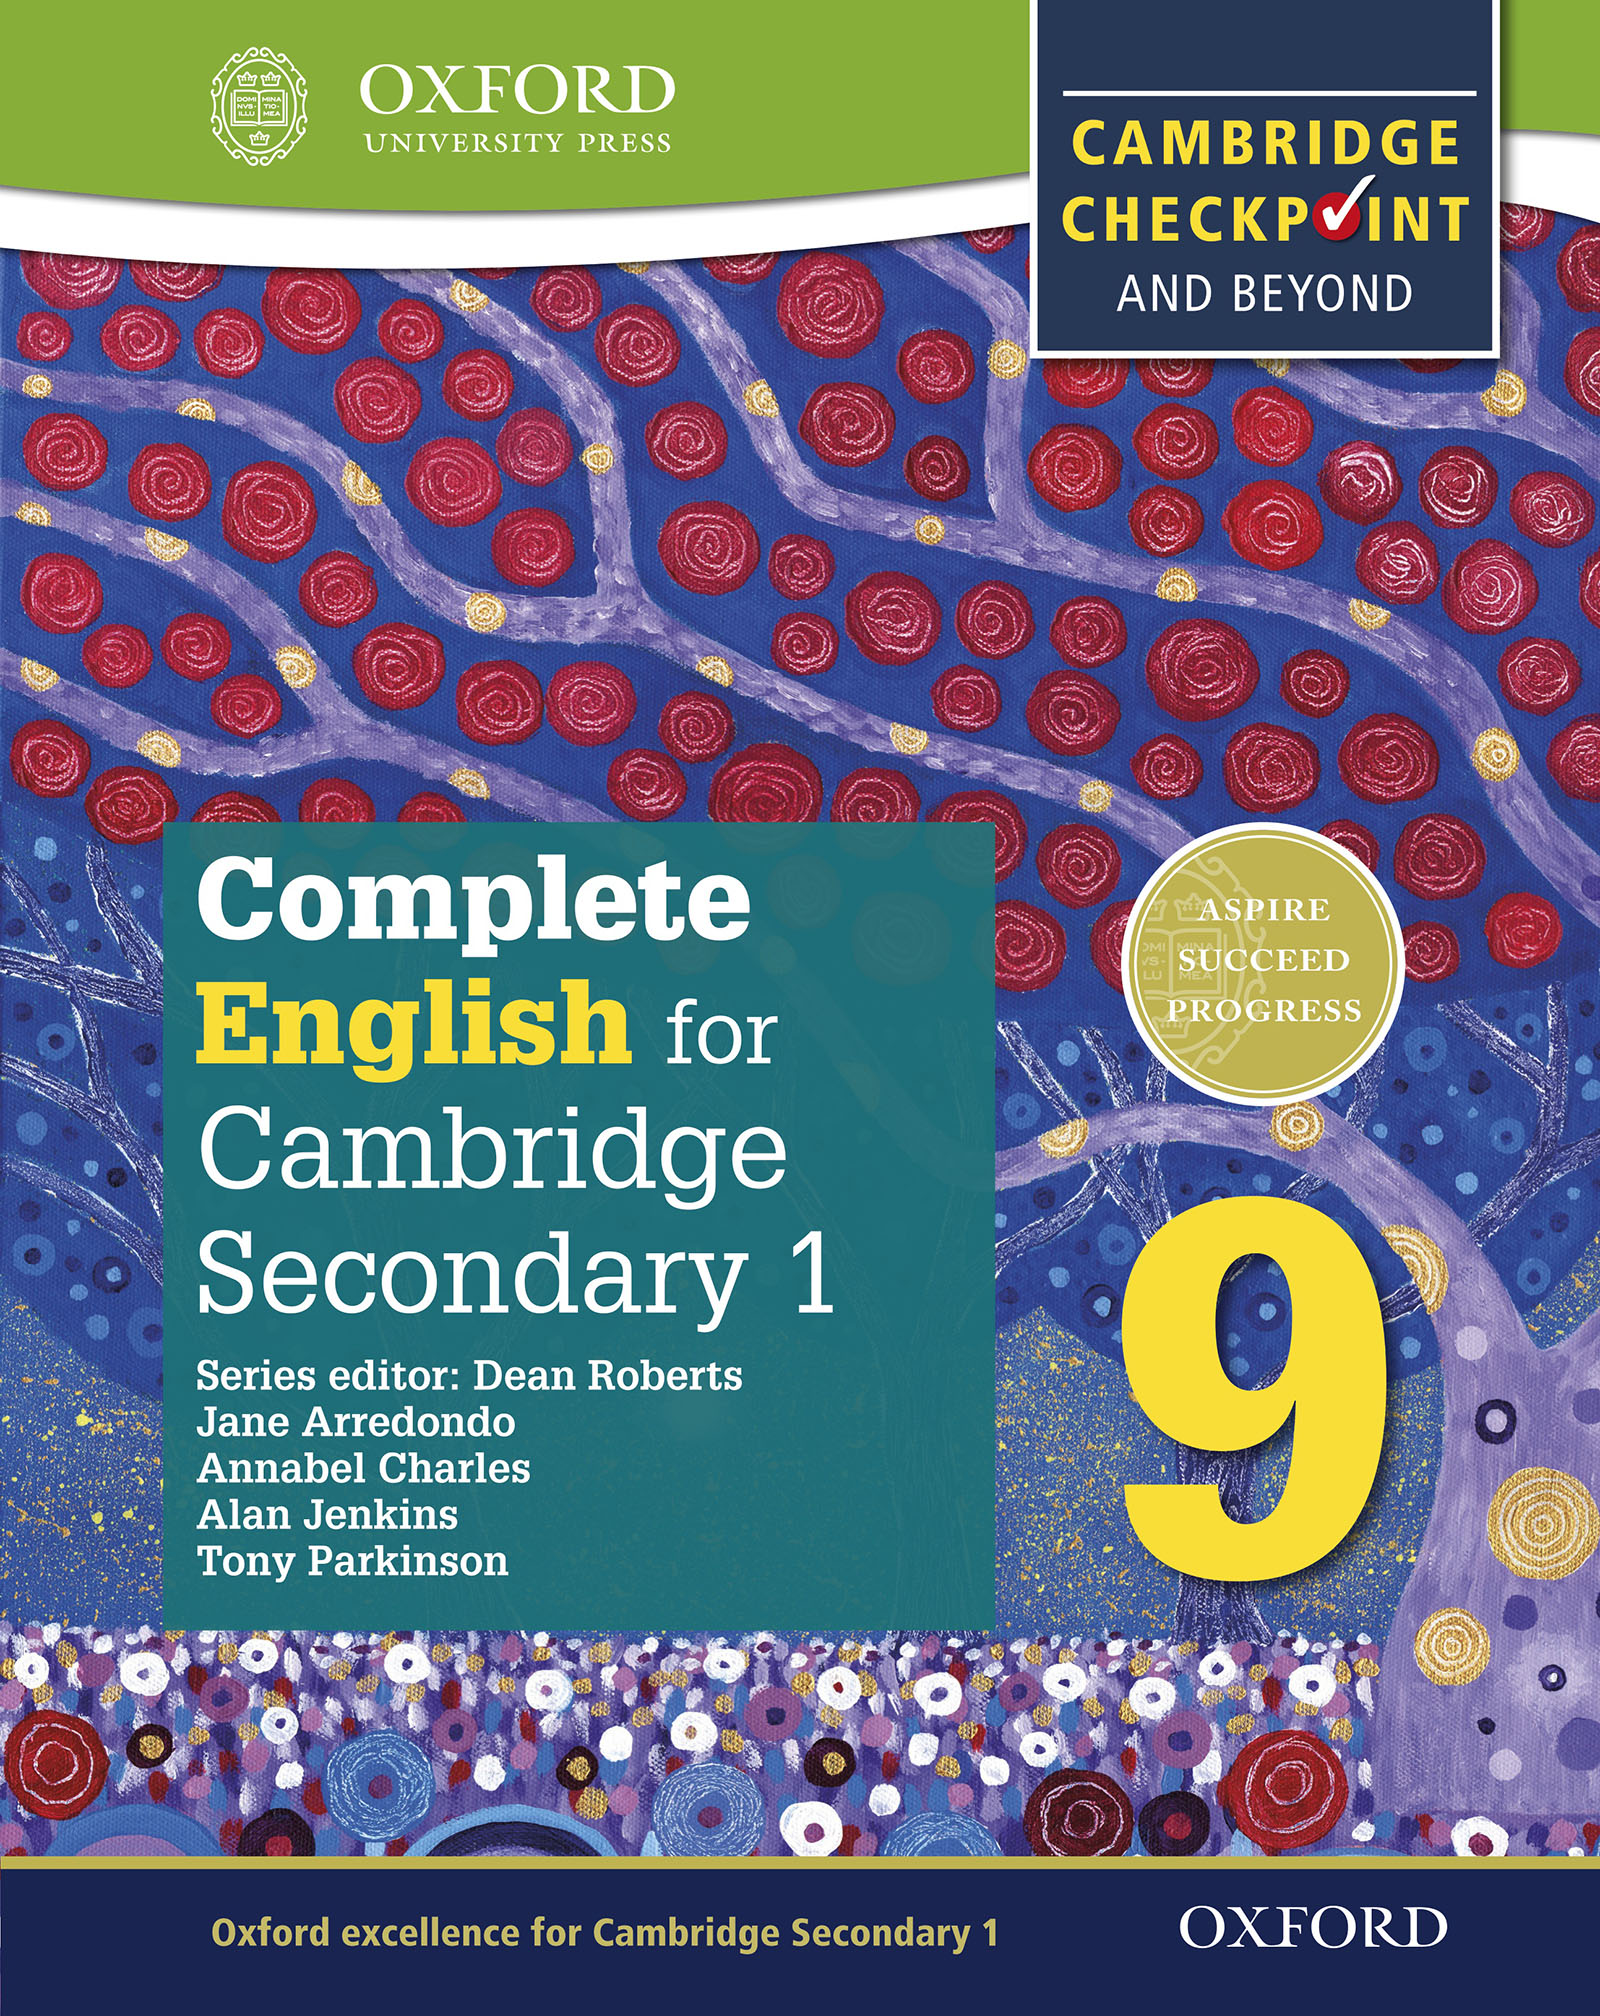 Complete english. Cambridge English for. Complete English for Cambridge secondary. Cambridge for secondary 1. Cambridge lower secondary.